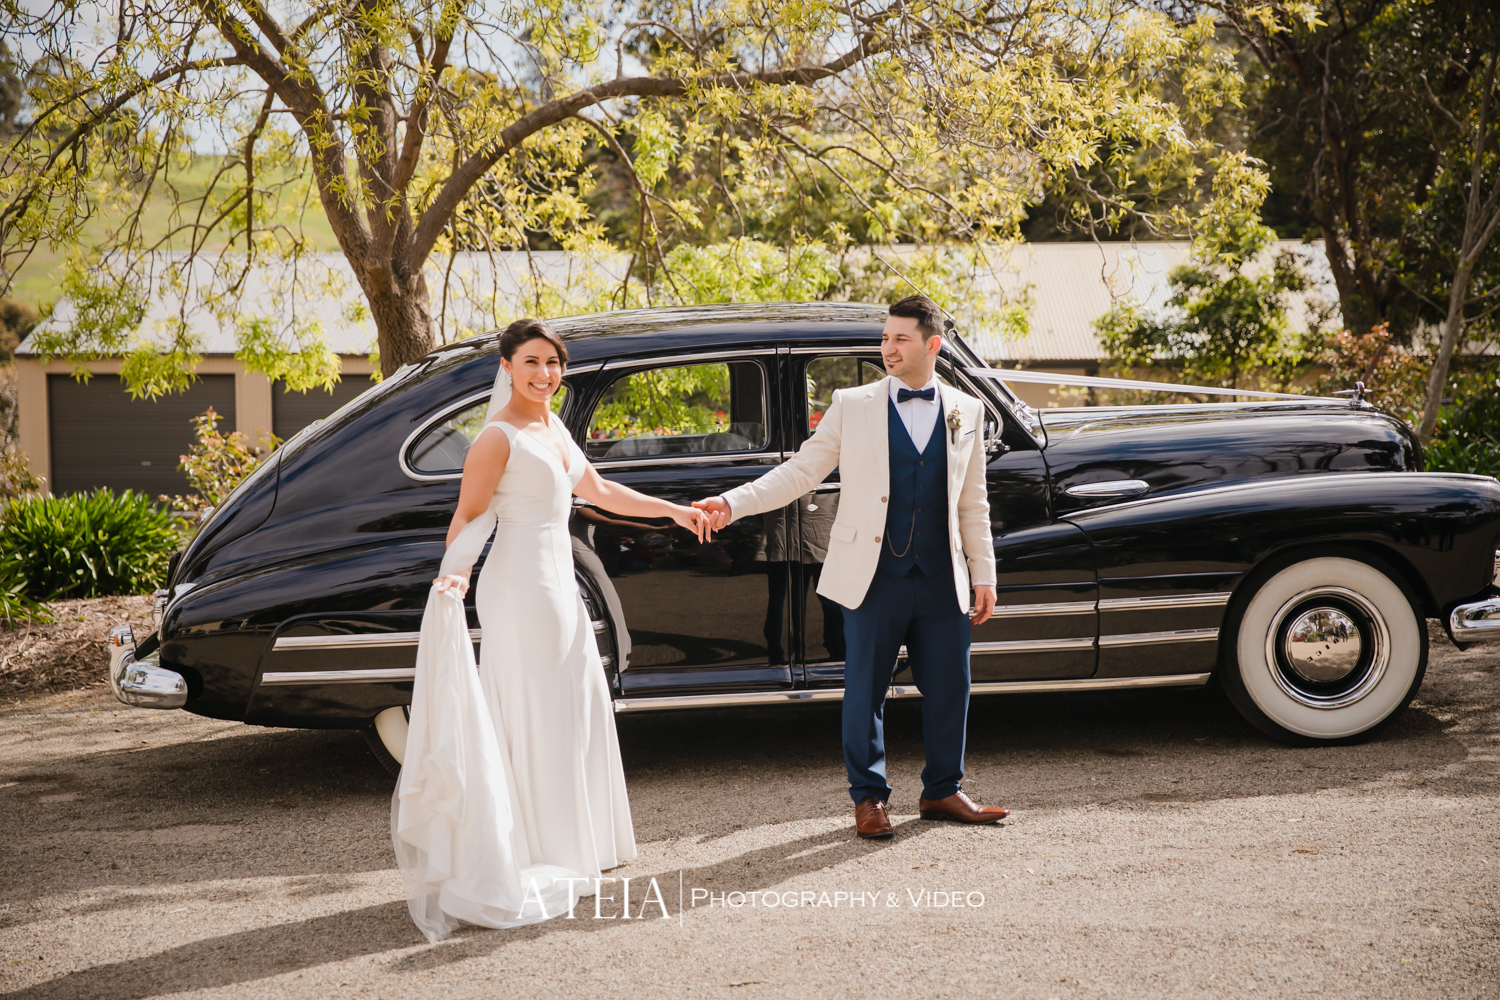 , Inglewood Estate Yarra Valley Wedding Photography by ATEIA